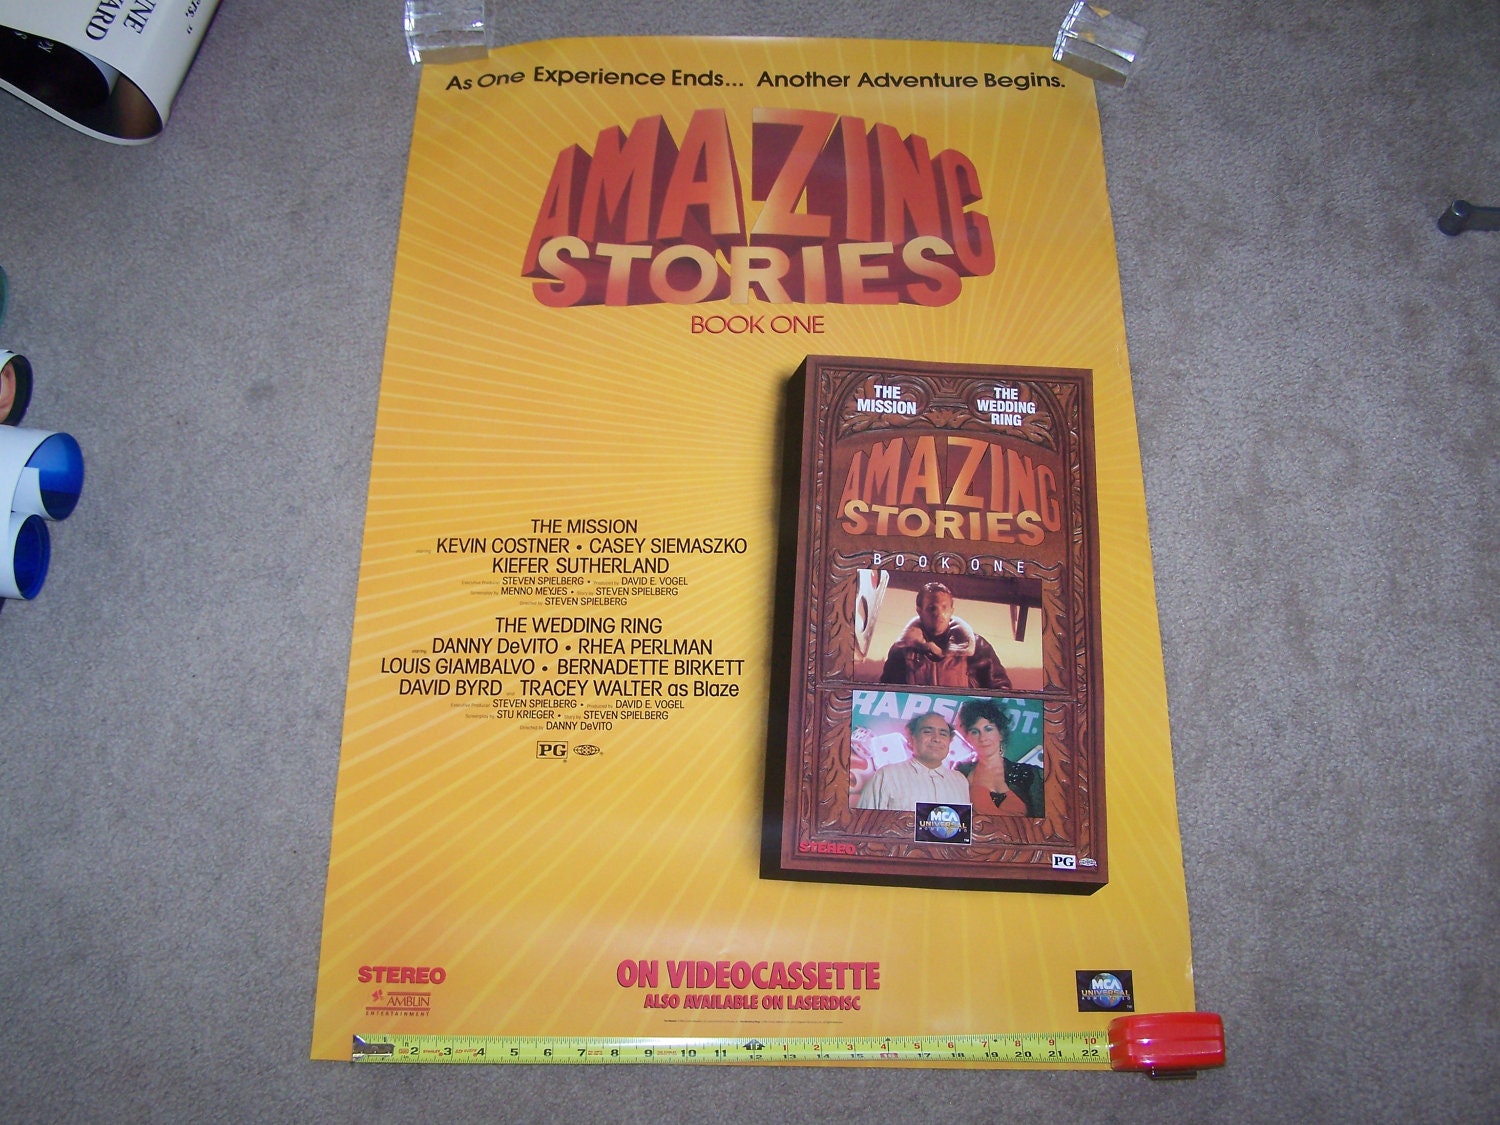 Amazing Stories - Book One movie